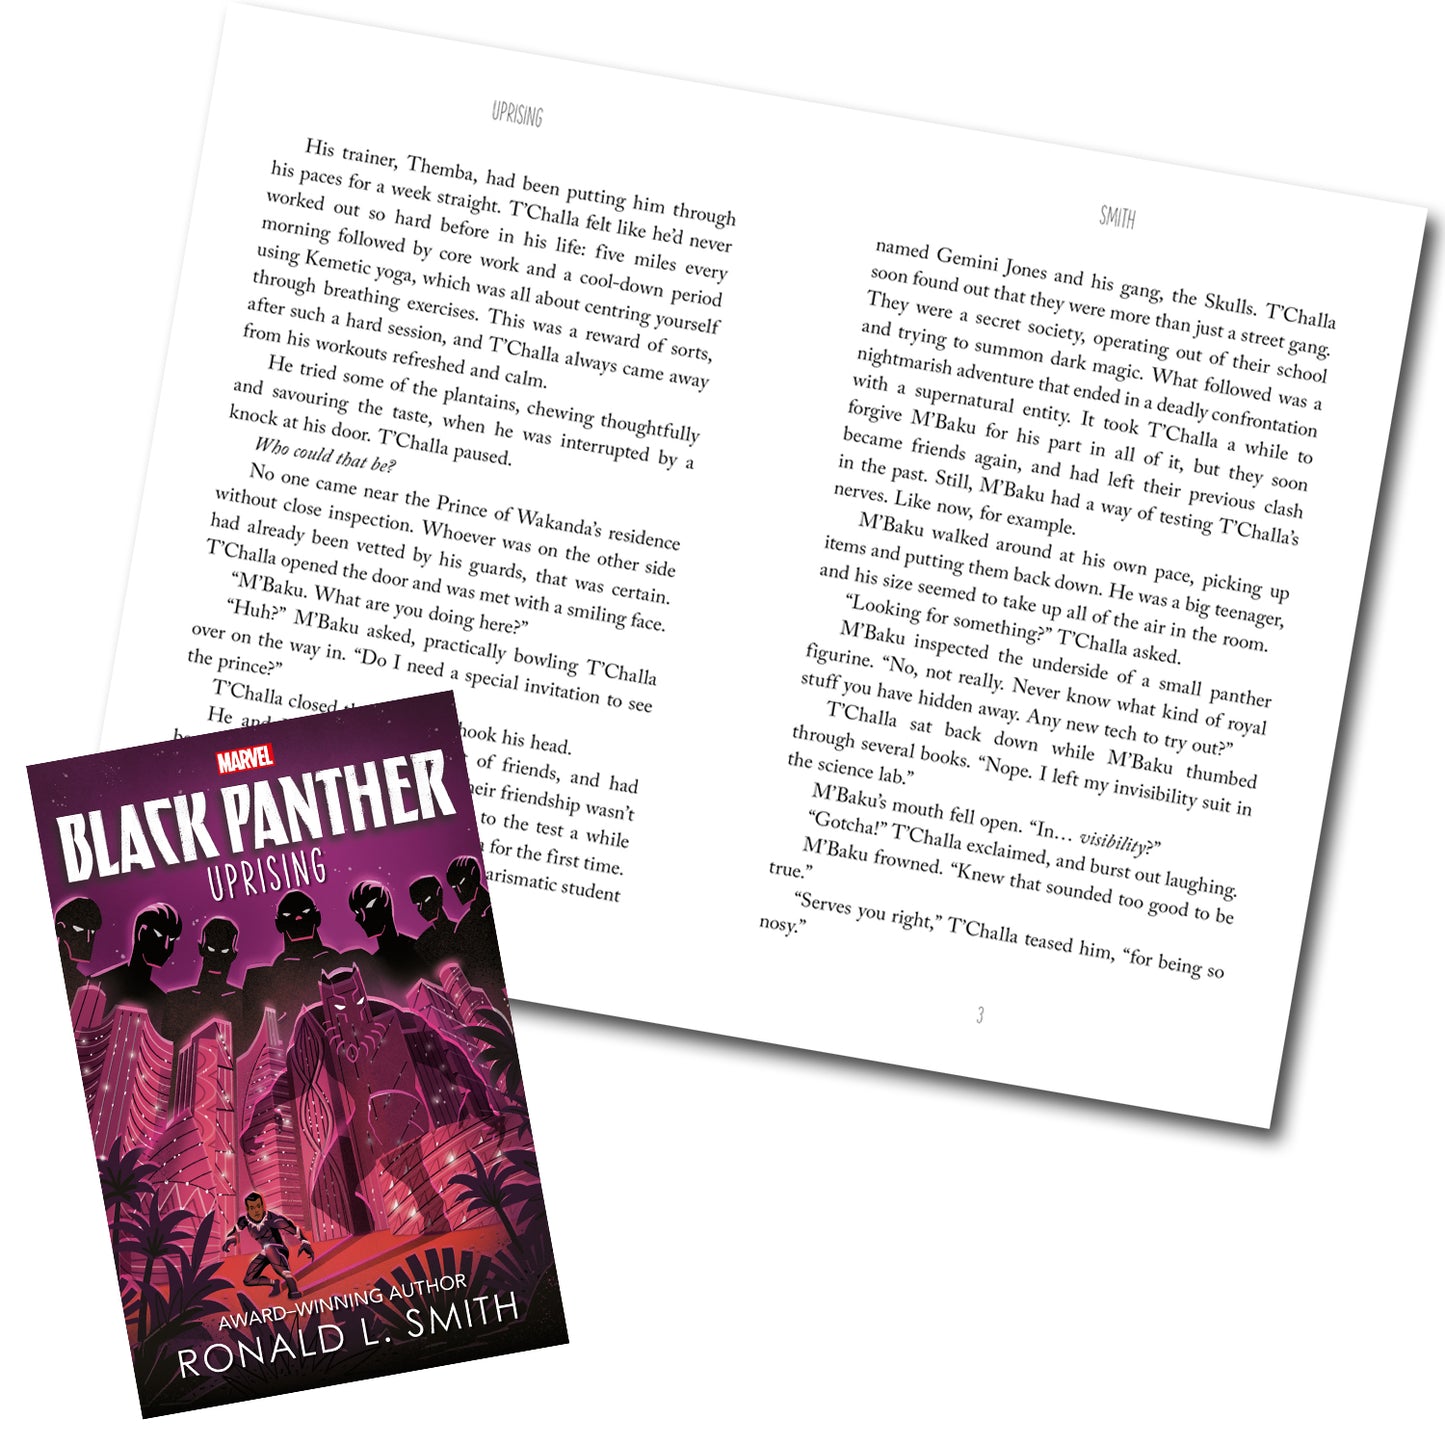 Black Panther| Okoye Set of 3 Story book [Paperback] Parragon